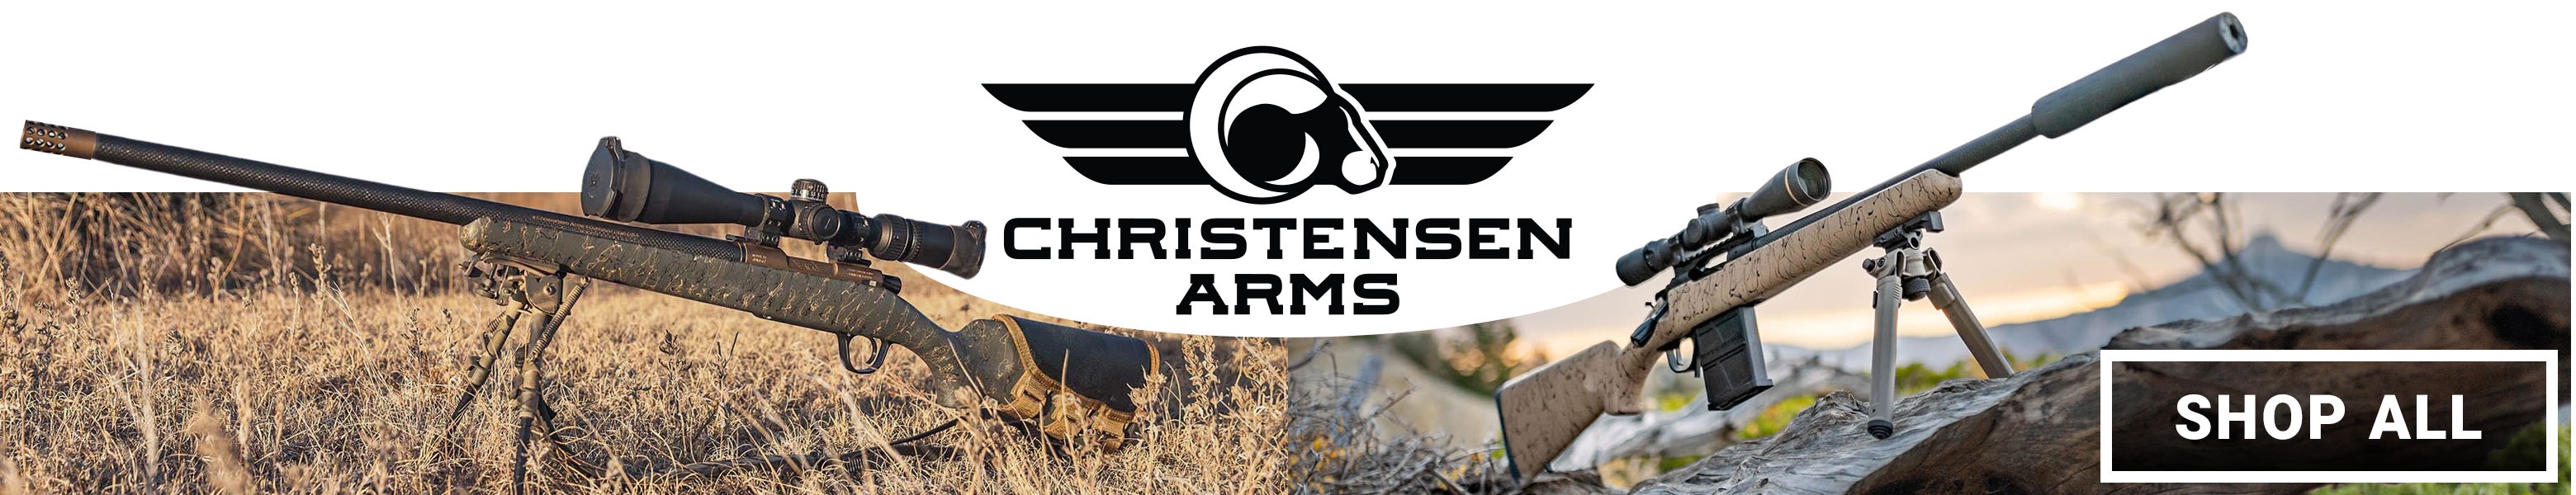 Shop All Christensen Arms